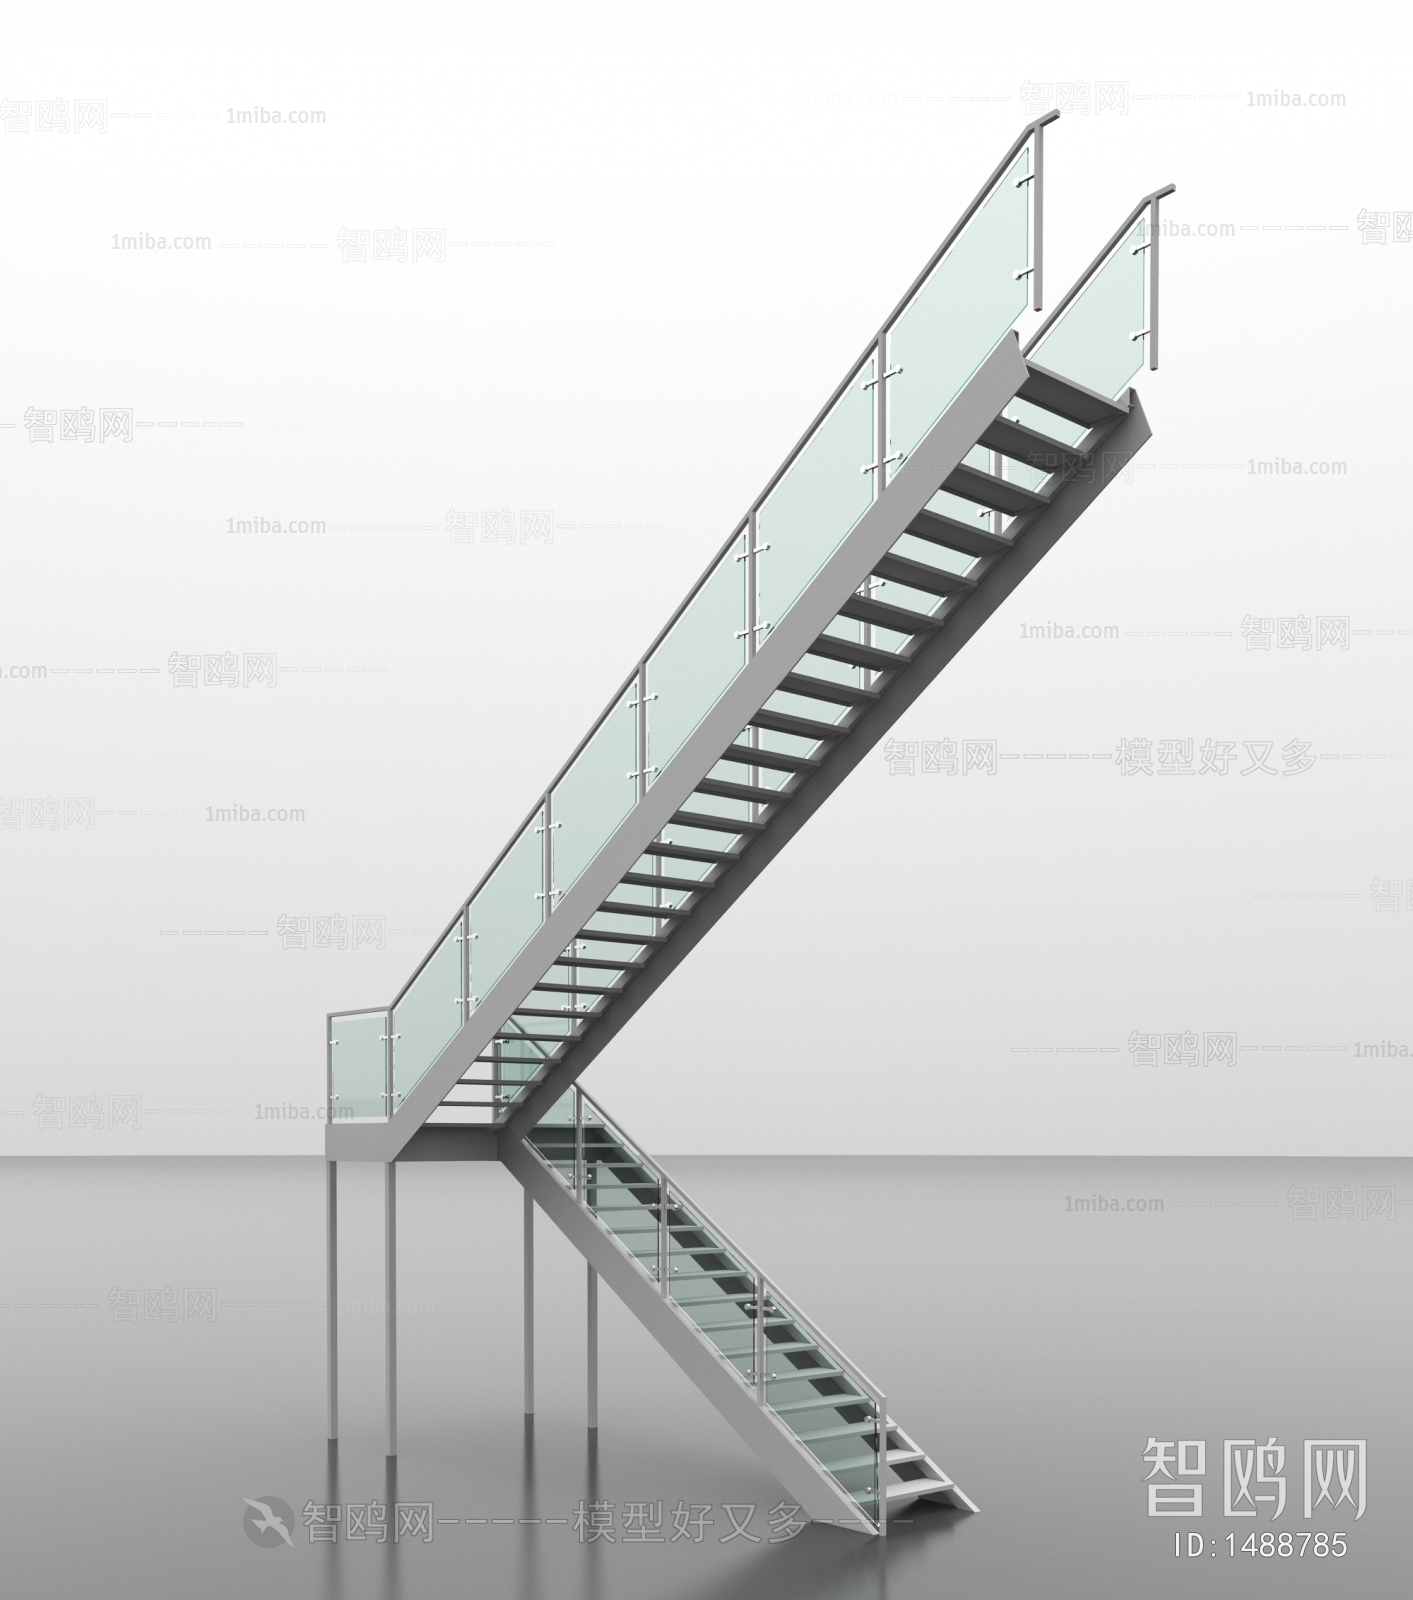 Modern Escalator